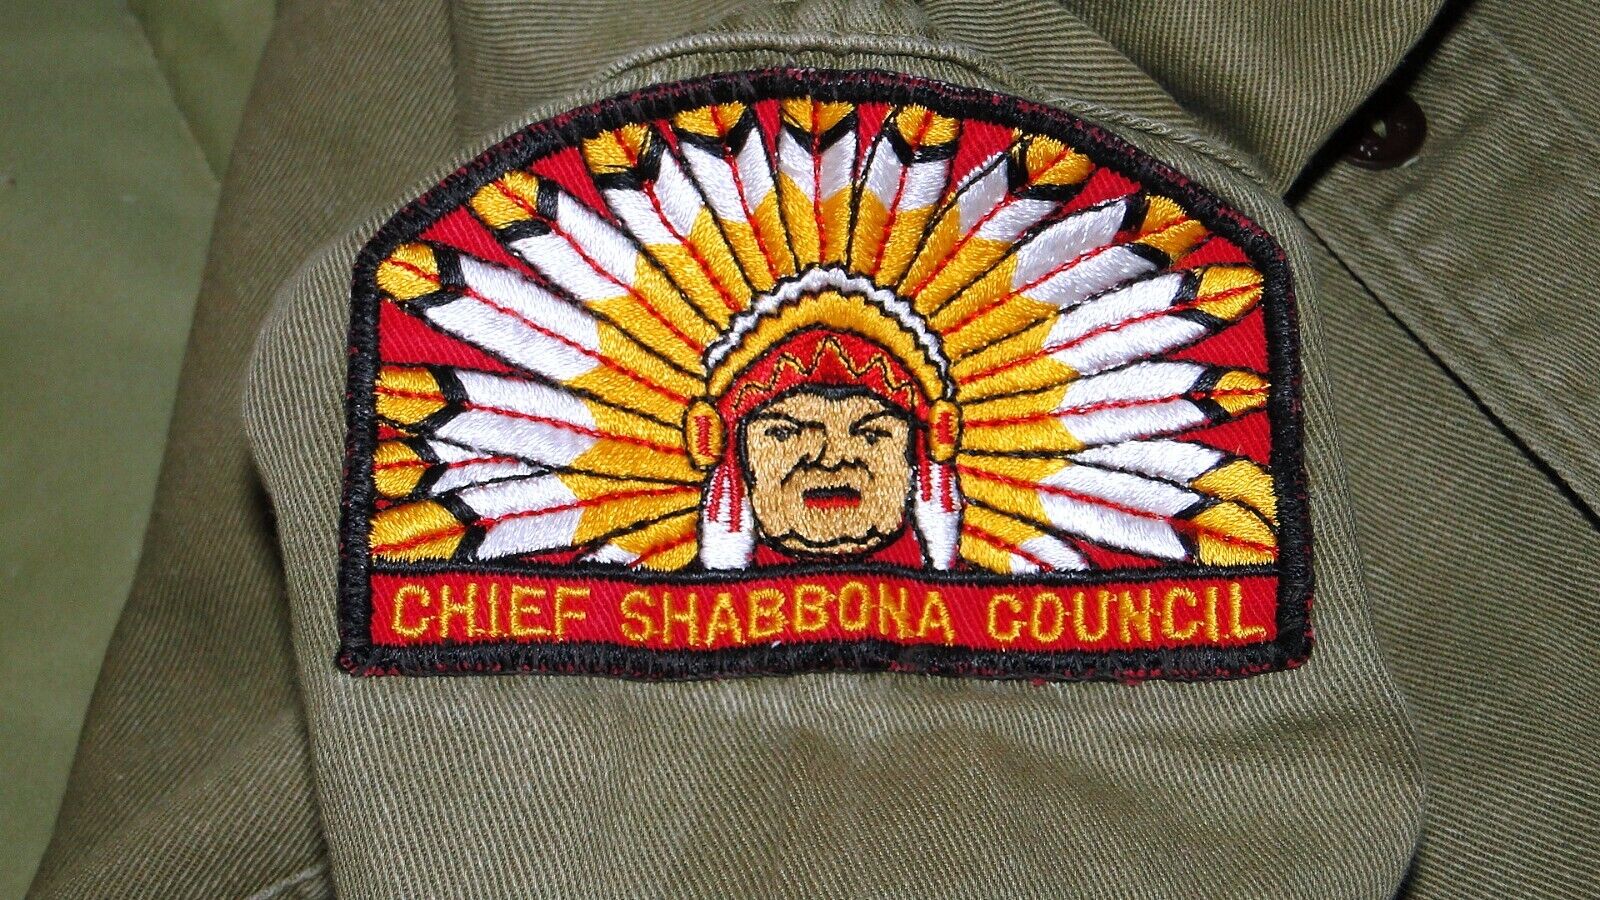 Vintage Chief Shabbona Council Patch Patches On Uniforms